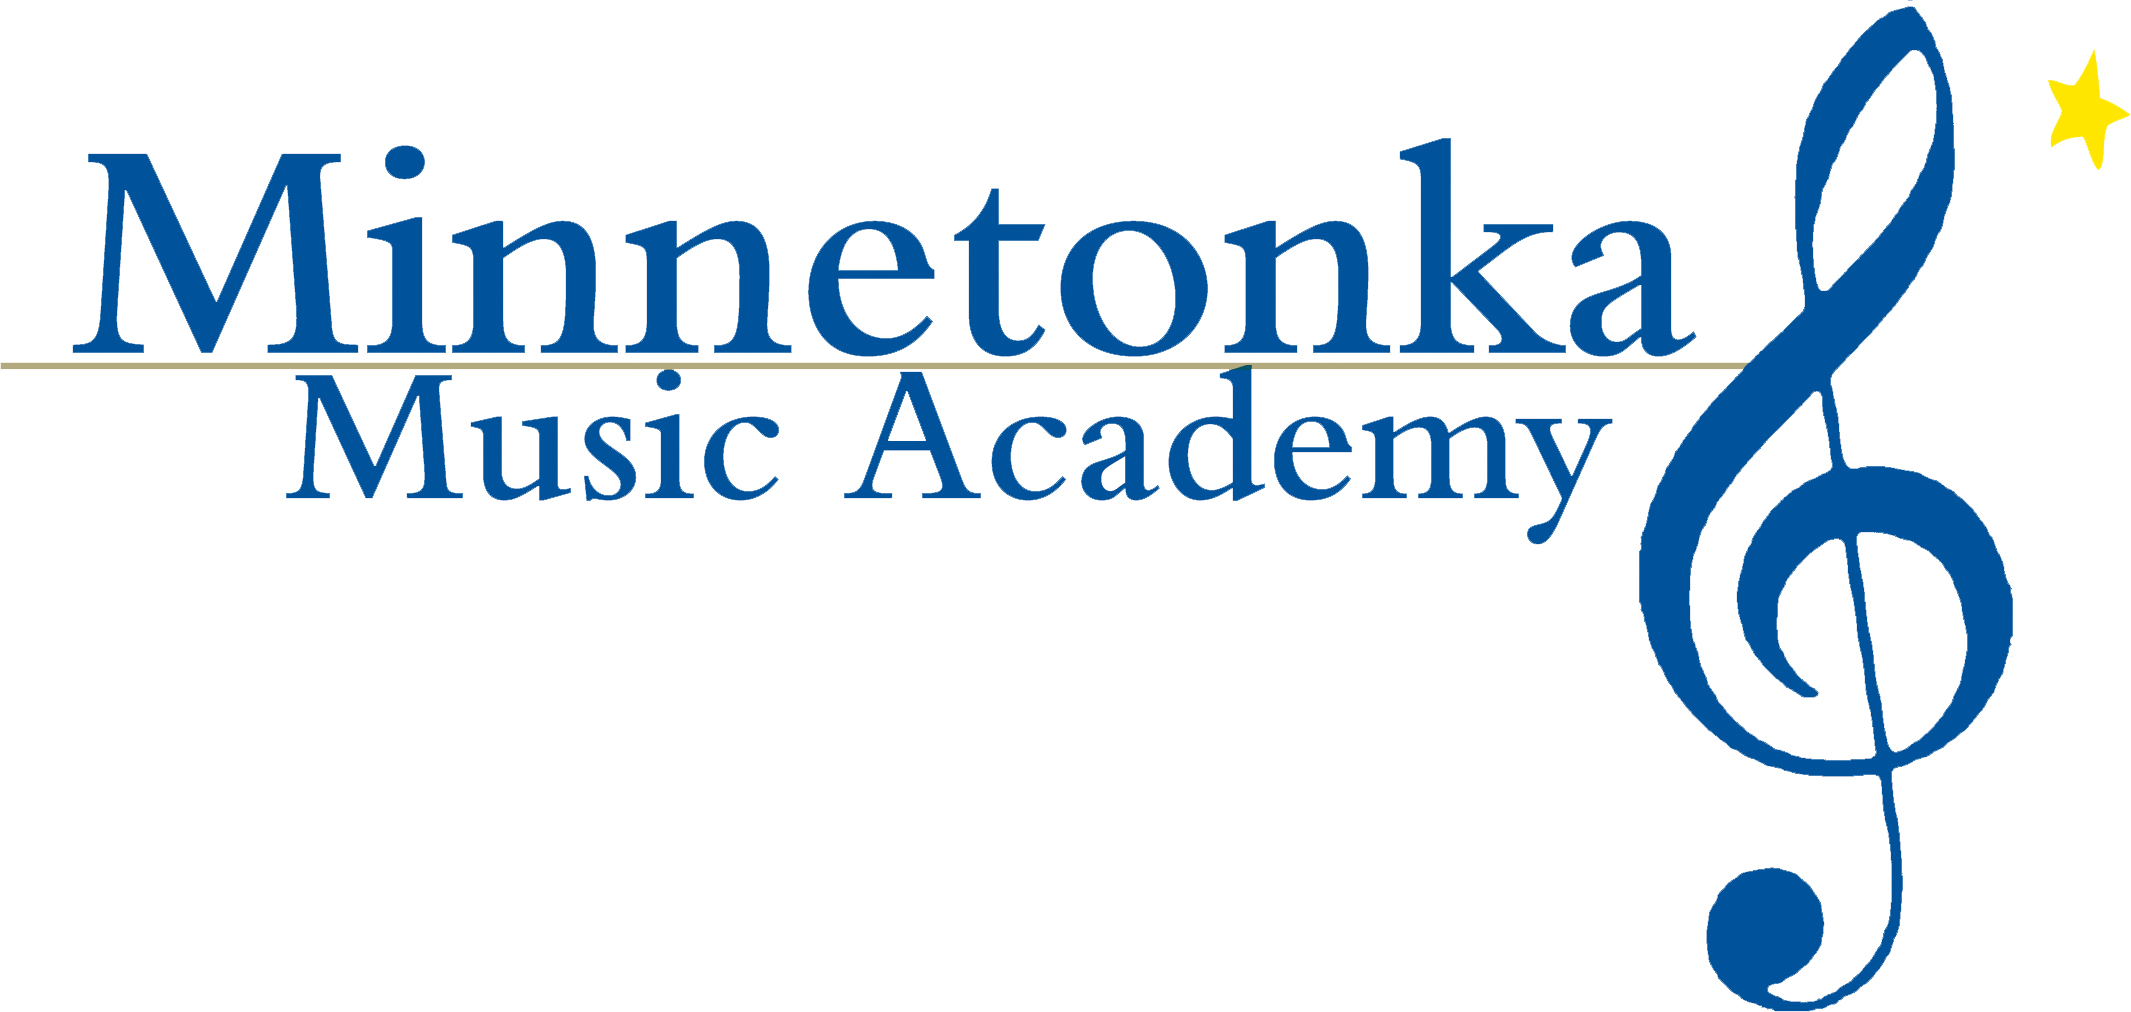 Minnetonka شعار أكاديمية الموسيقى